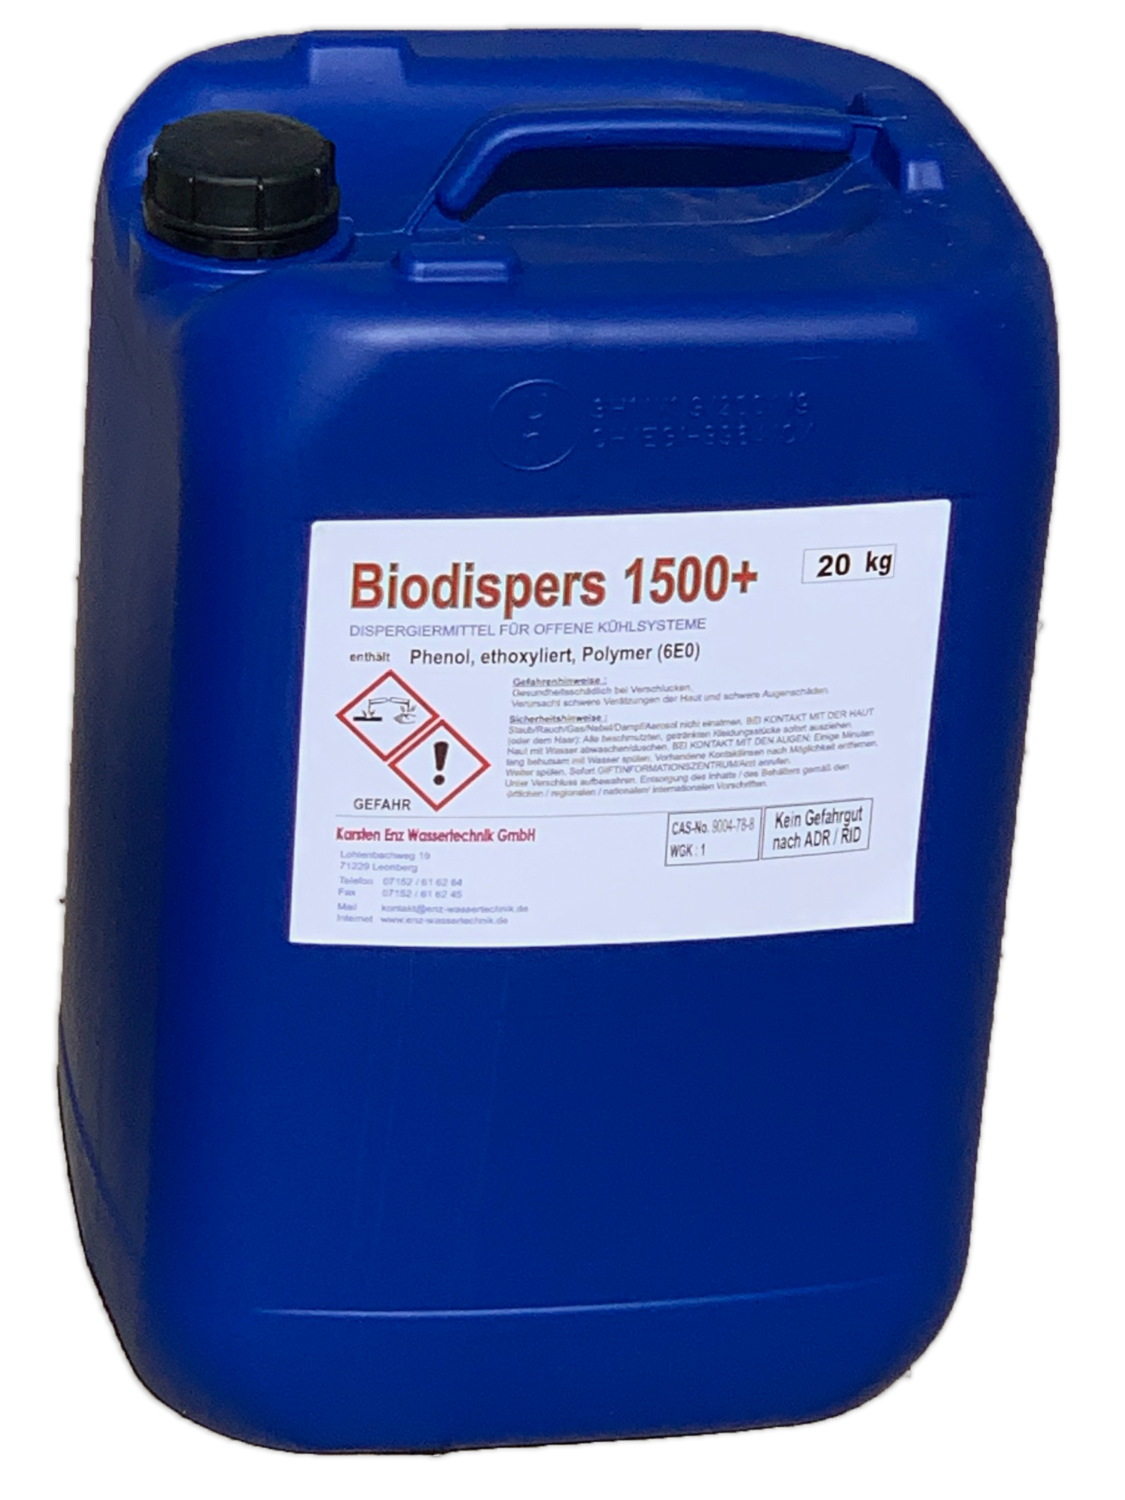 Biodispers 1500+